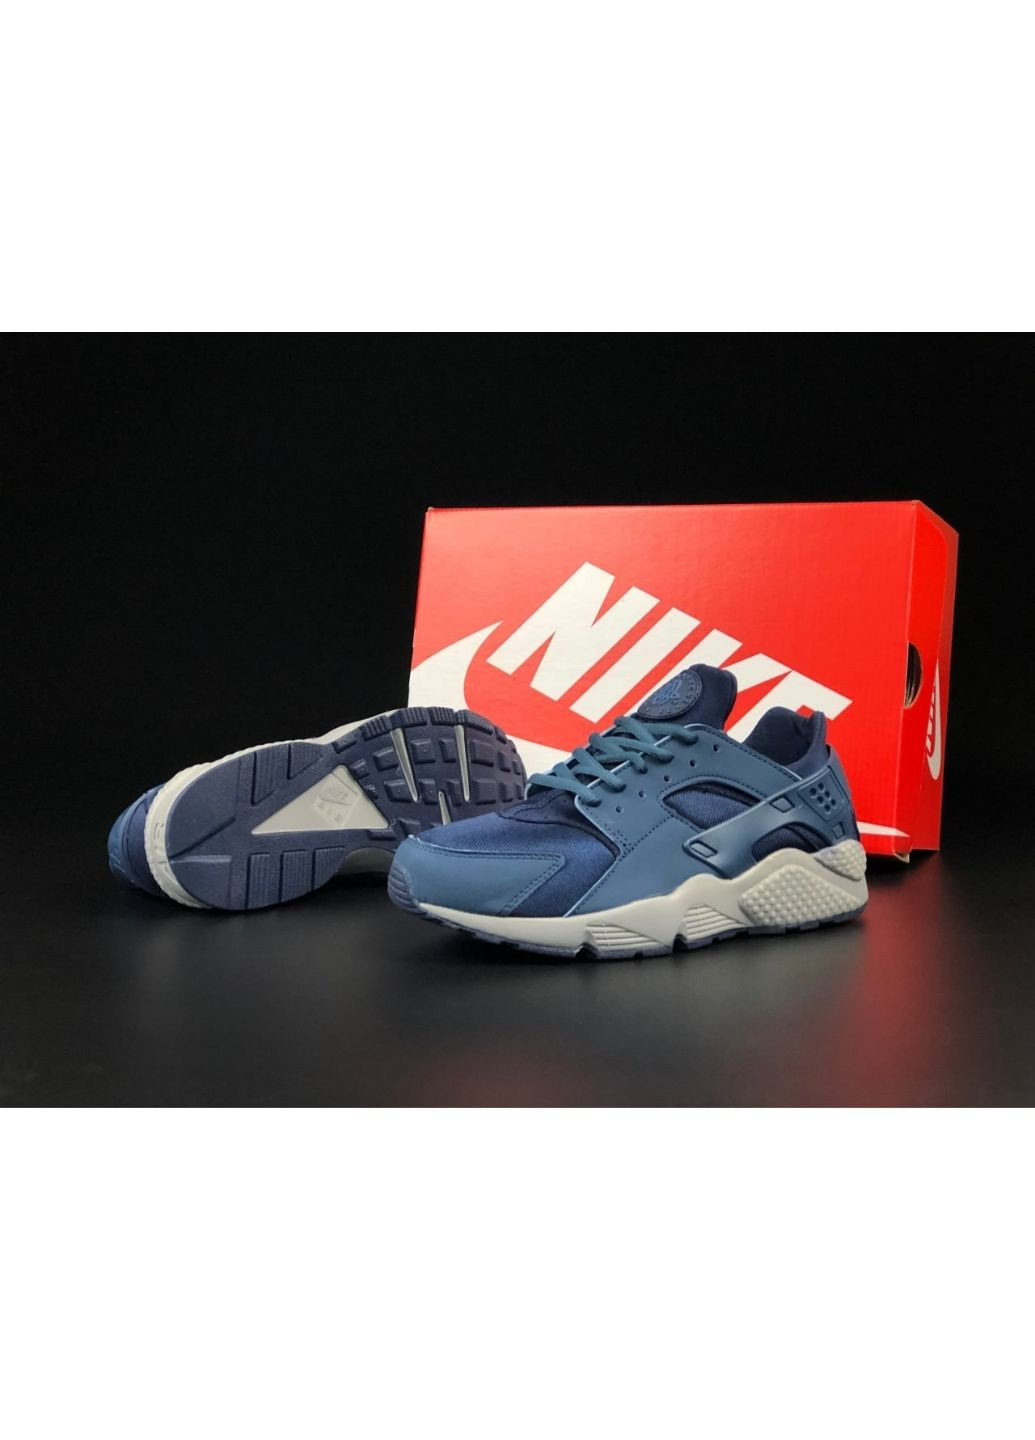 Синие демисезонные мужские кроссовки темно синие с бежевым "no name" Nike Huarache